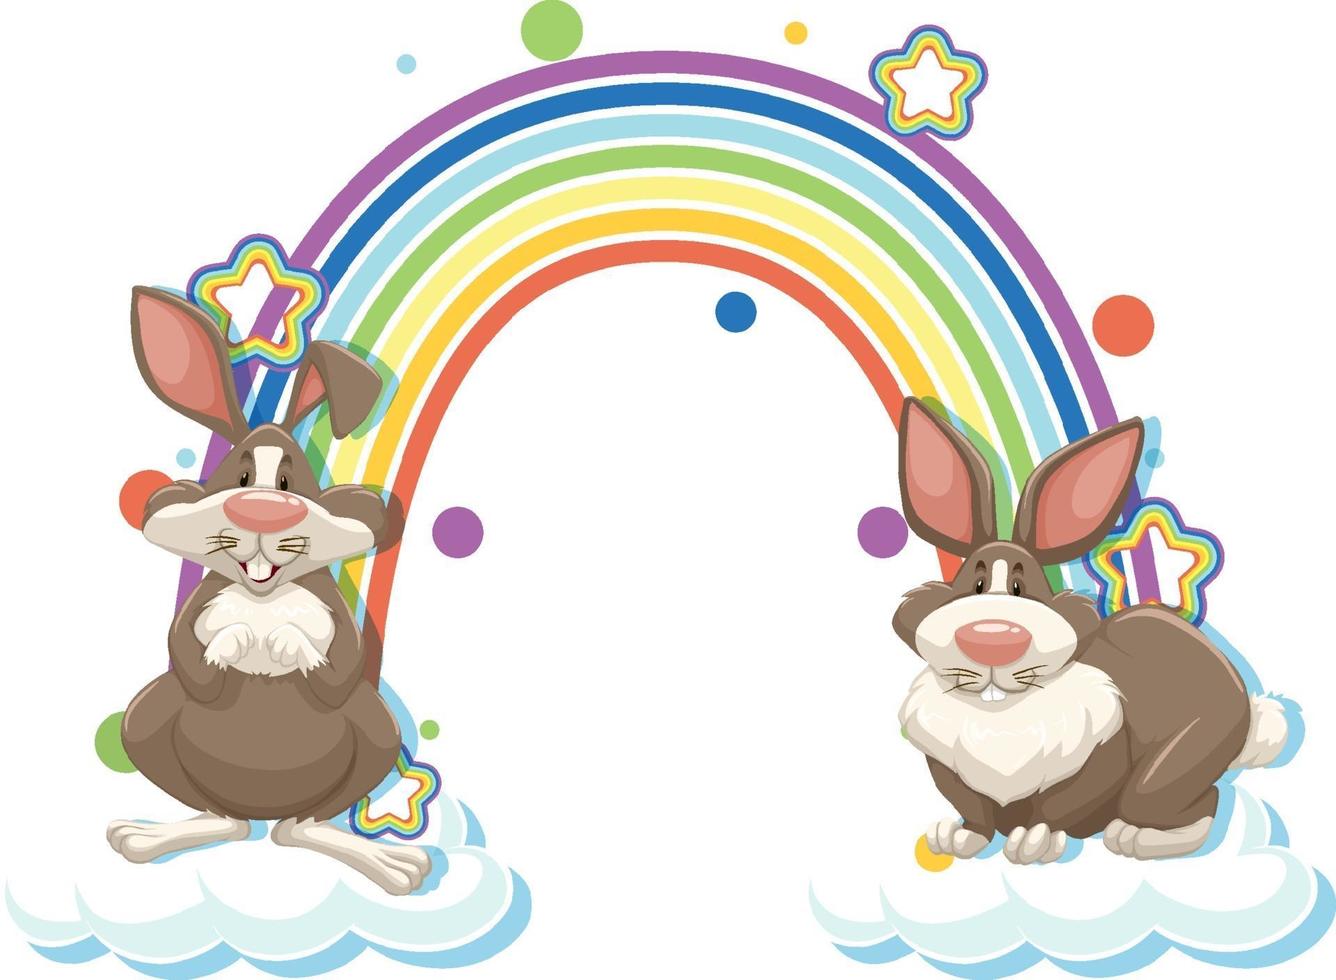 Two rabbits cartoon character with rainbow vector